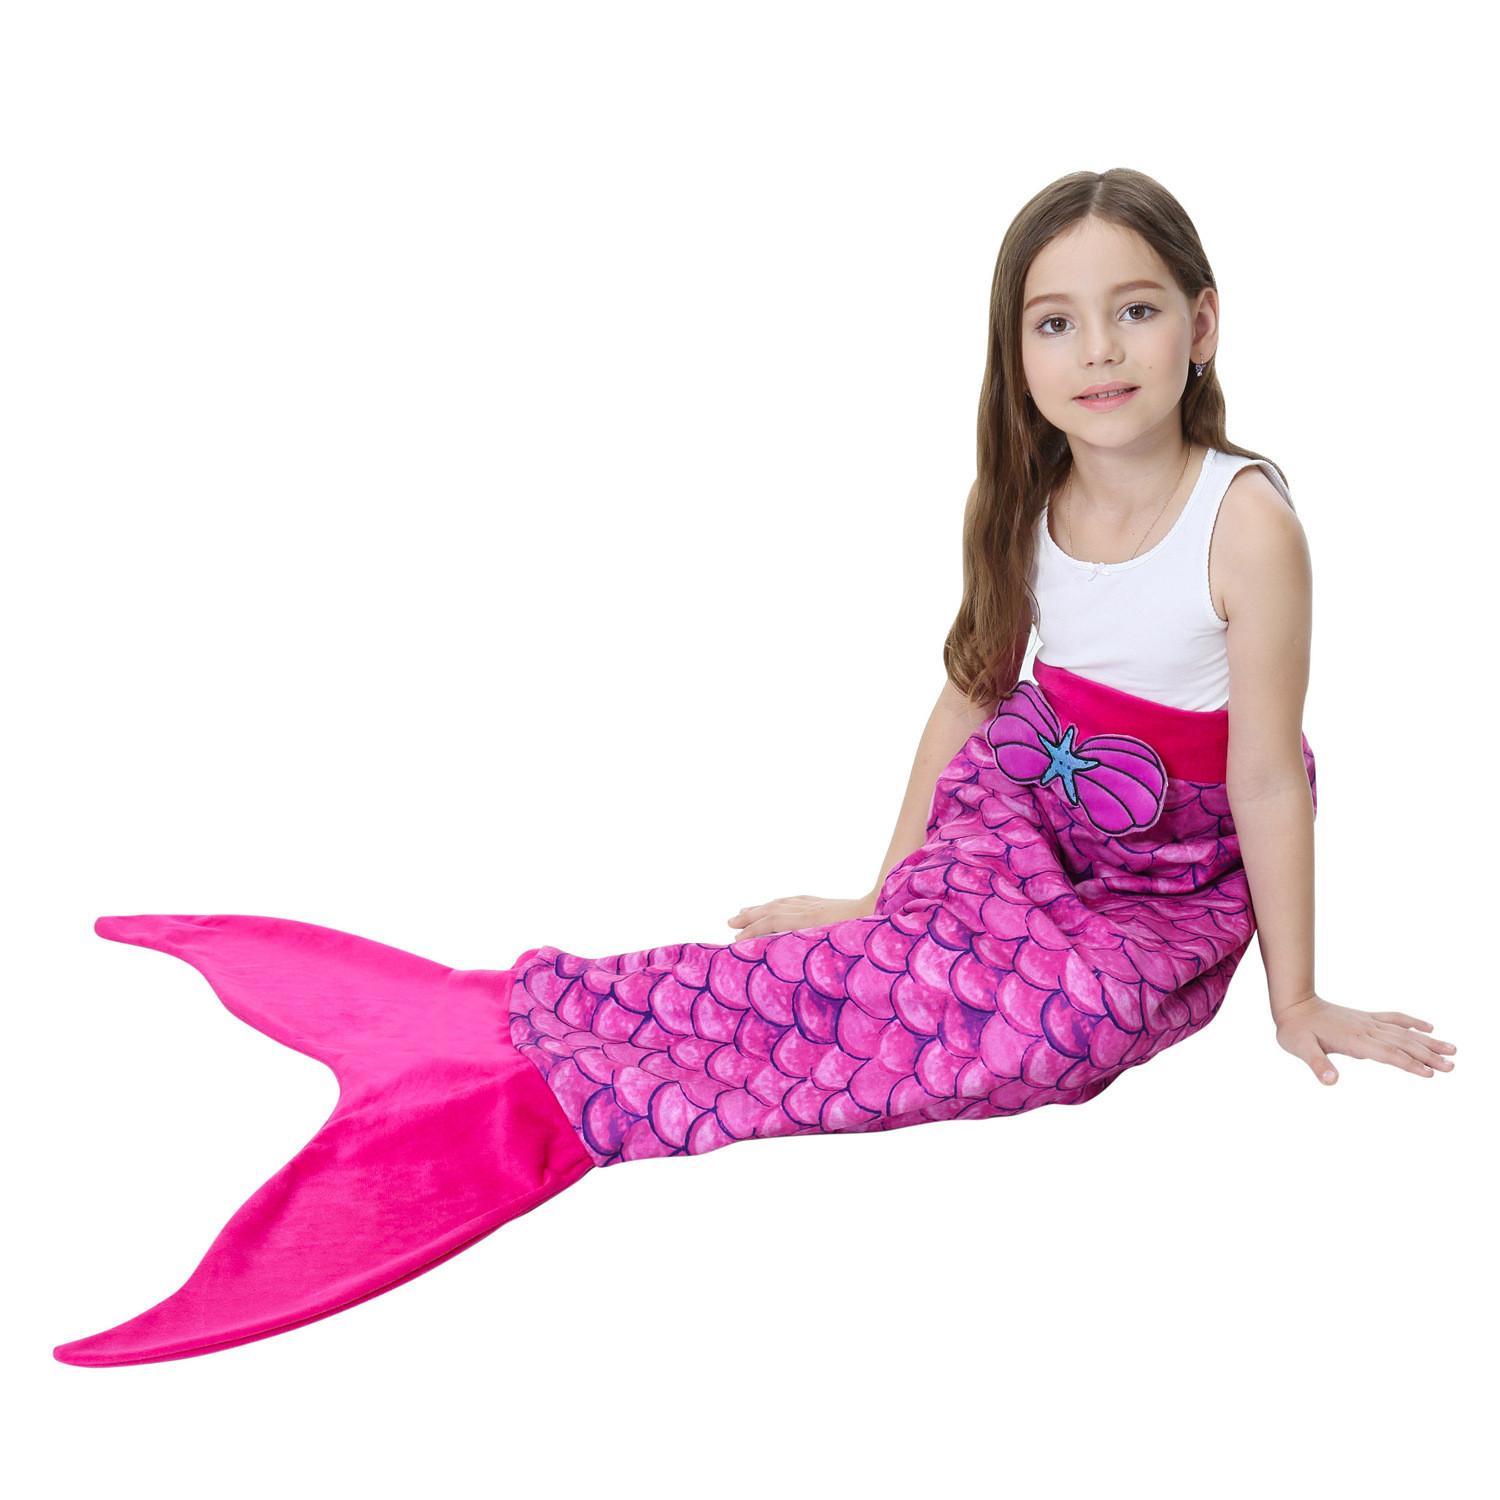 Mermaid Tales Blankets, Swimwear and More!